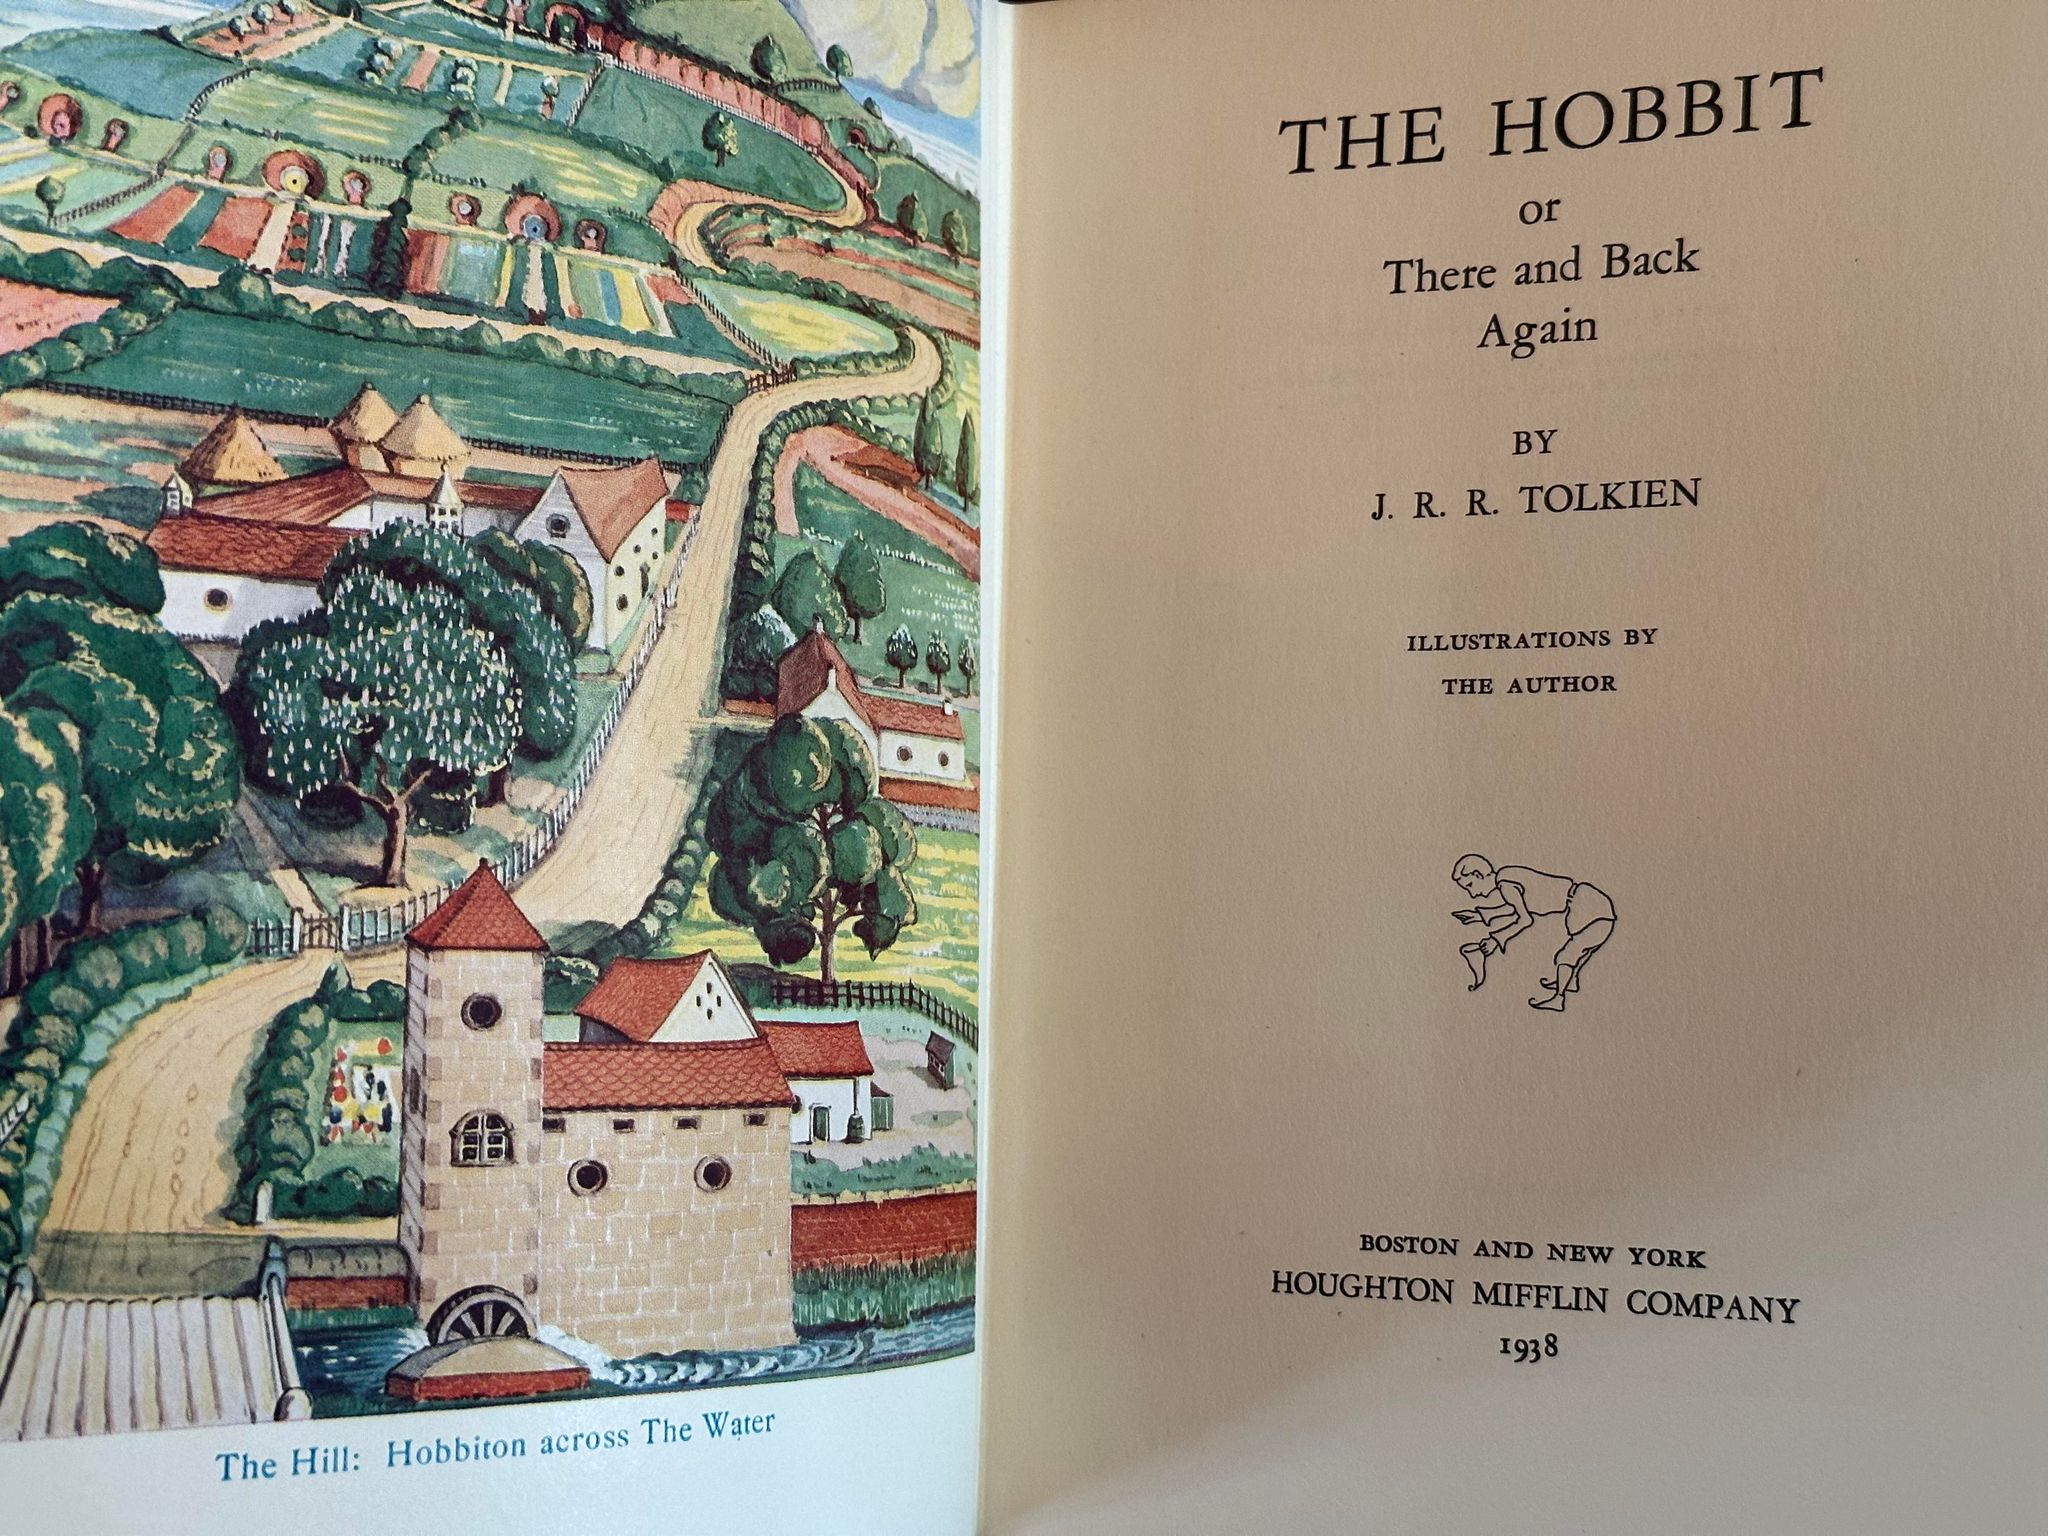 Hobbit 1st state title page.jpeg